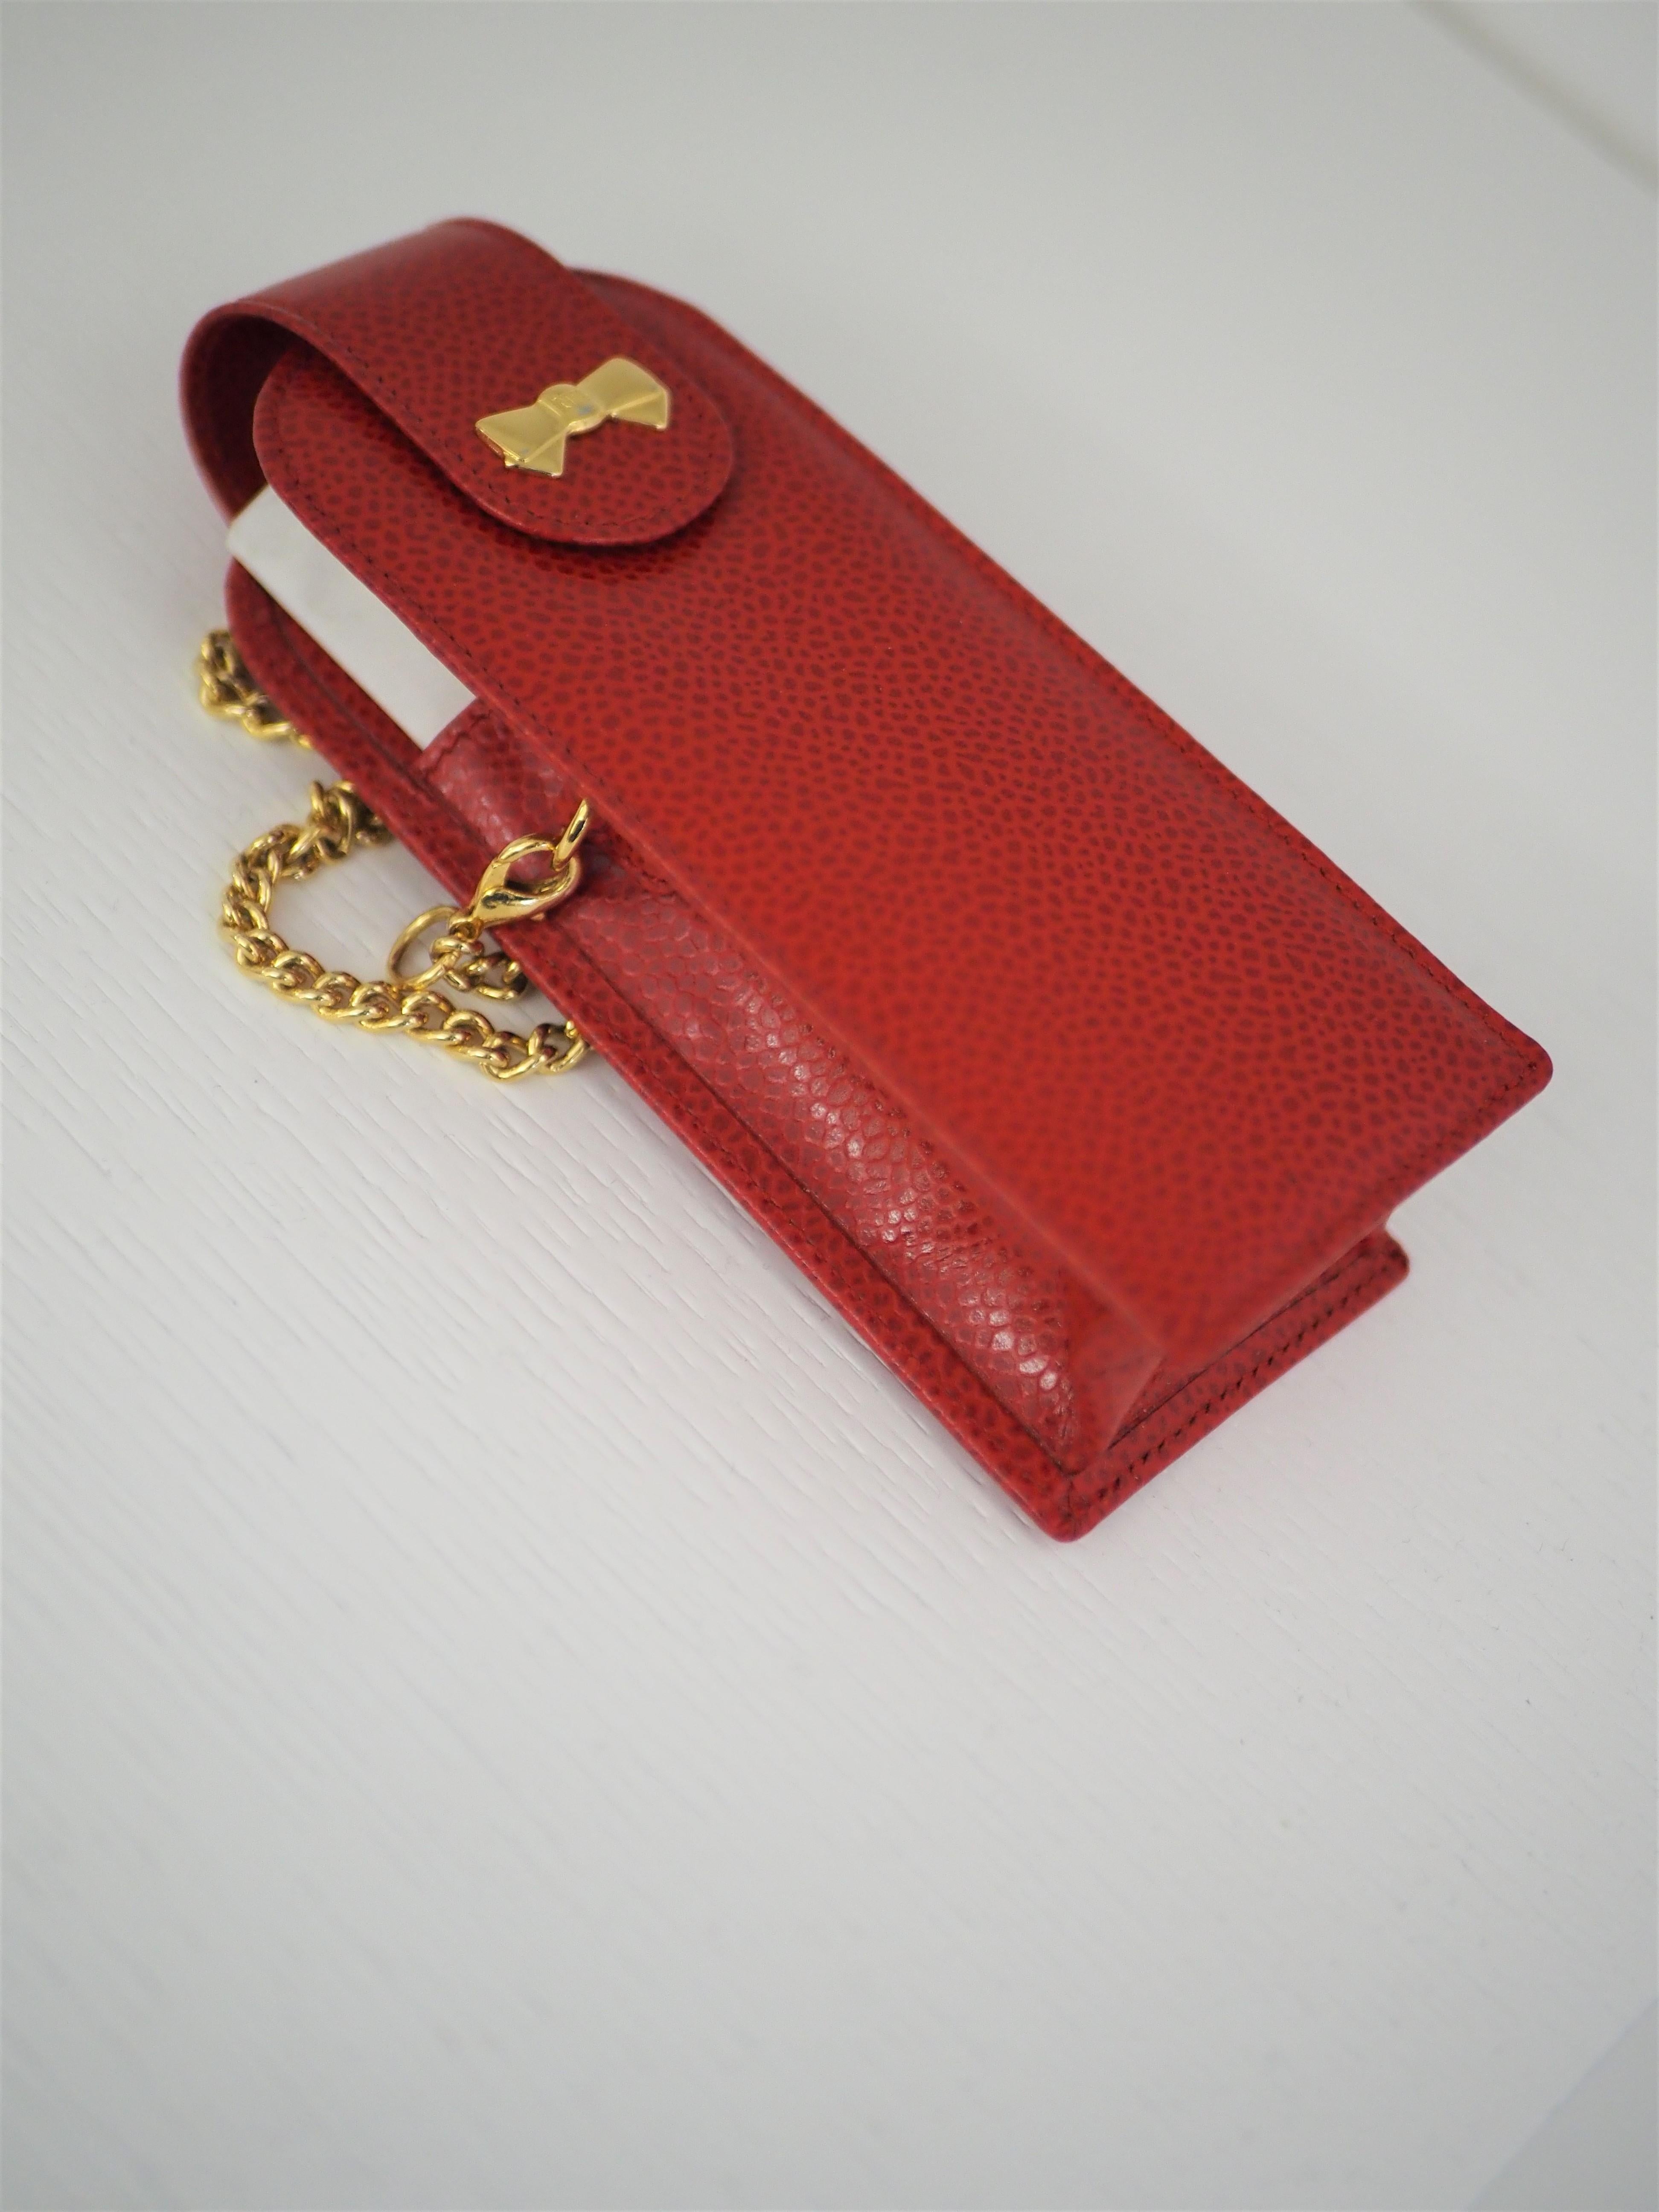 Nina Ricci red small shoulder bag handbag In Excellent Condition For Sale In Capri, IT